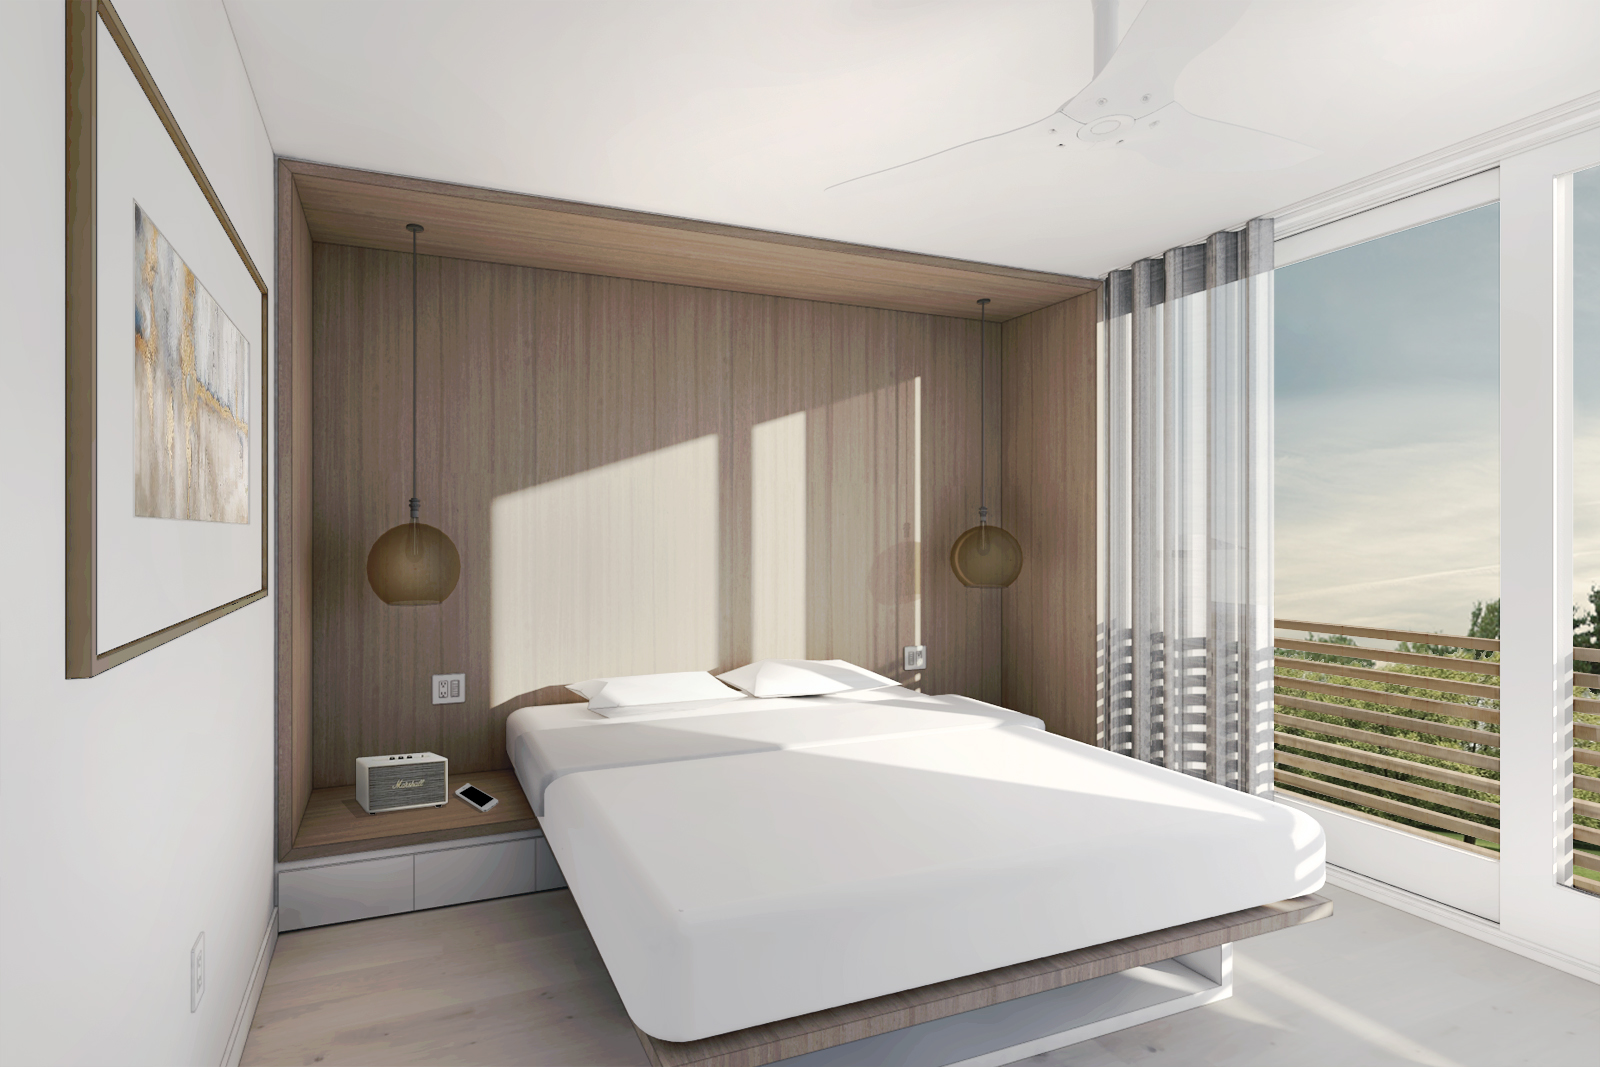 05-res4-resolution-4-architecture-modern-modular-prefab-long-beach-house-interior-guest-bedroom-rendering.jpg